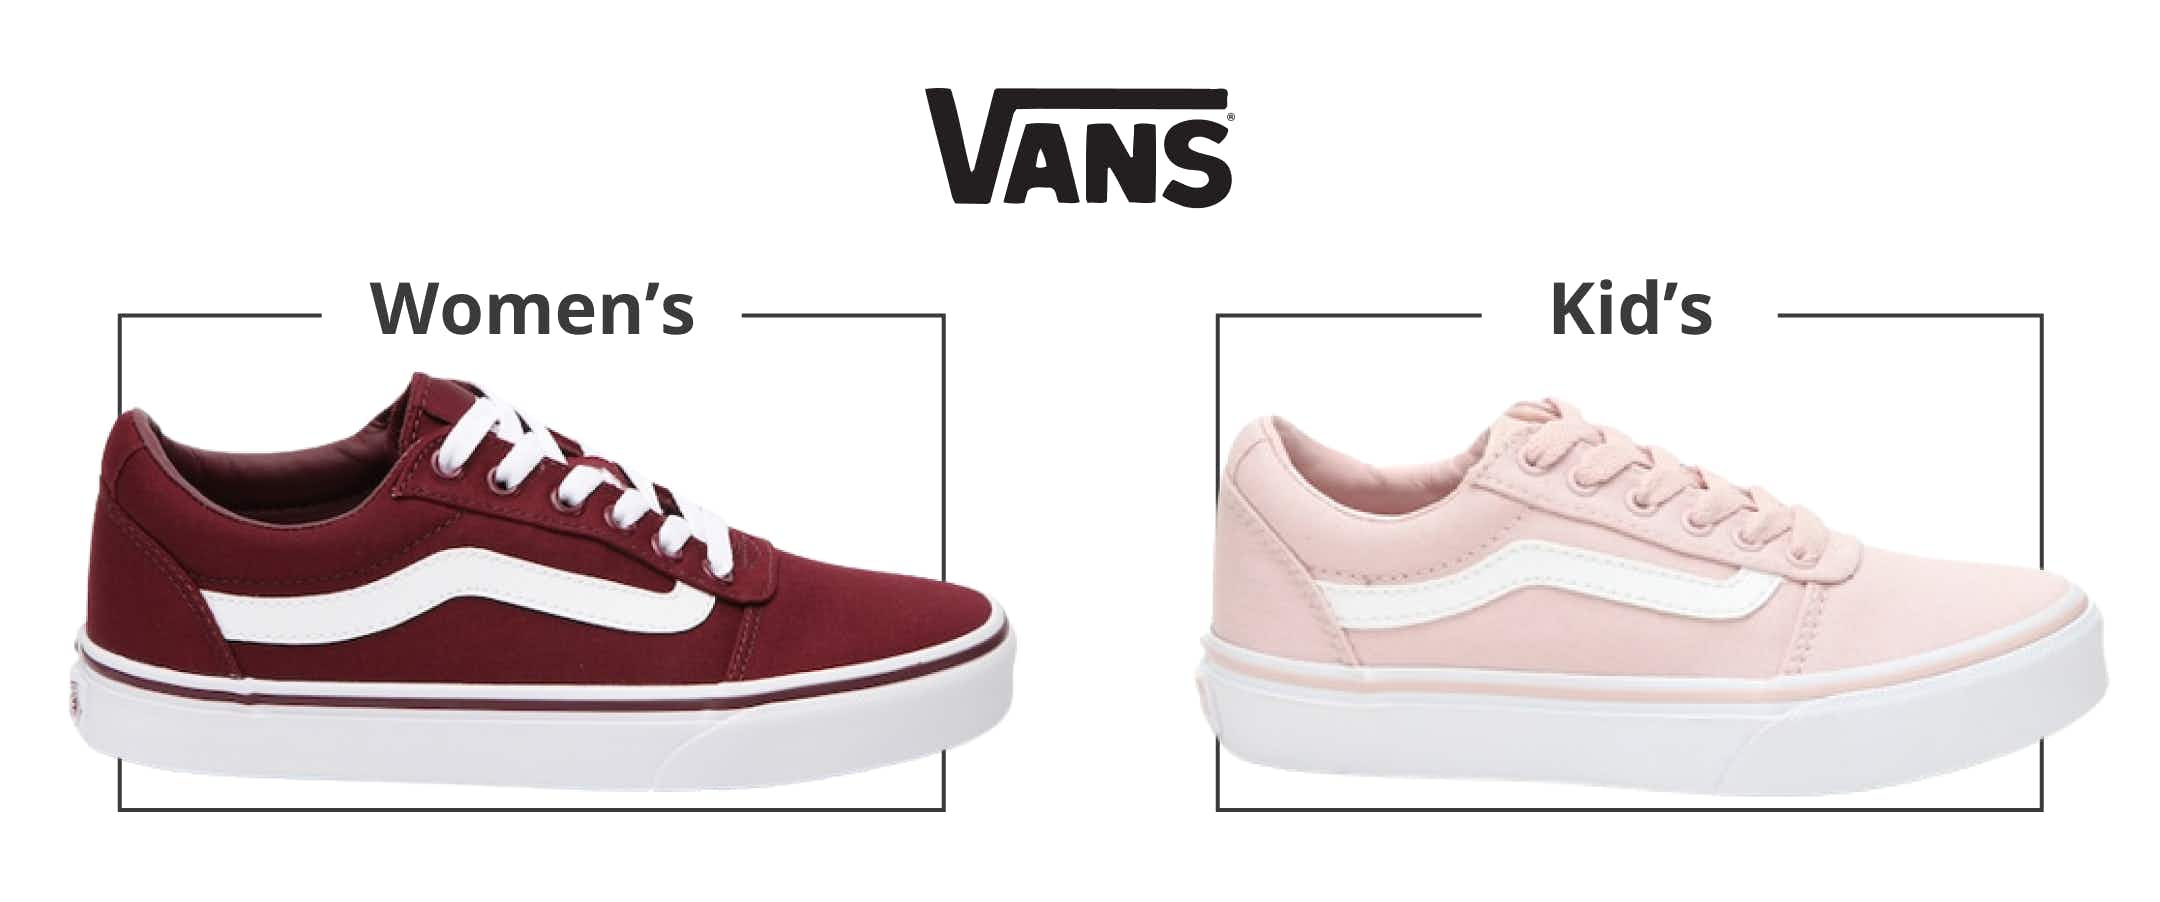 A comparison of a kid's and women's Vans shoe